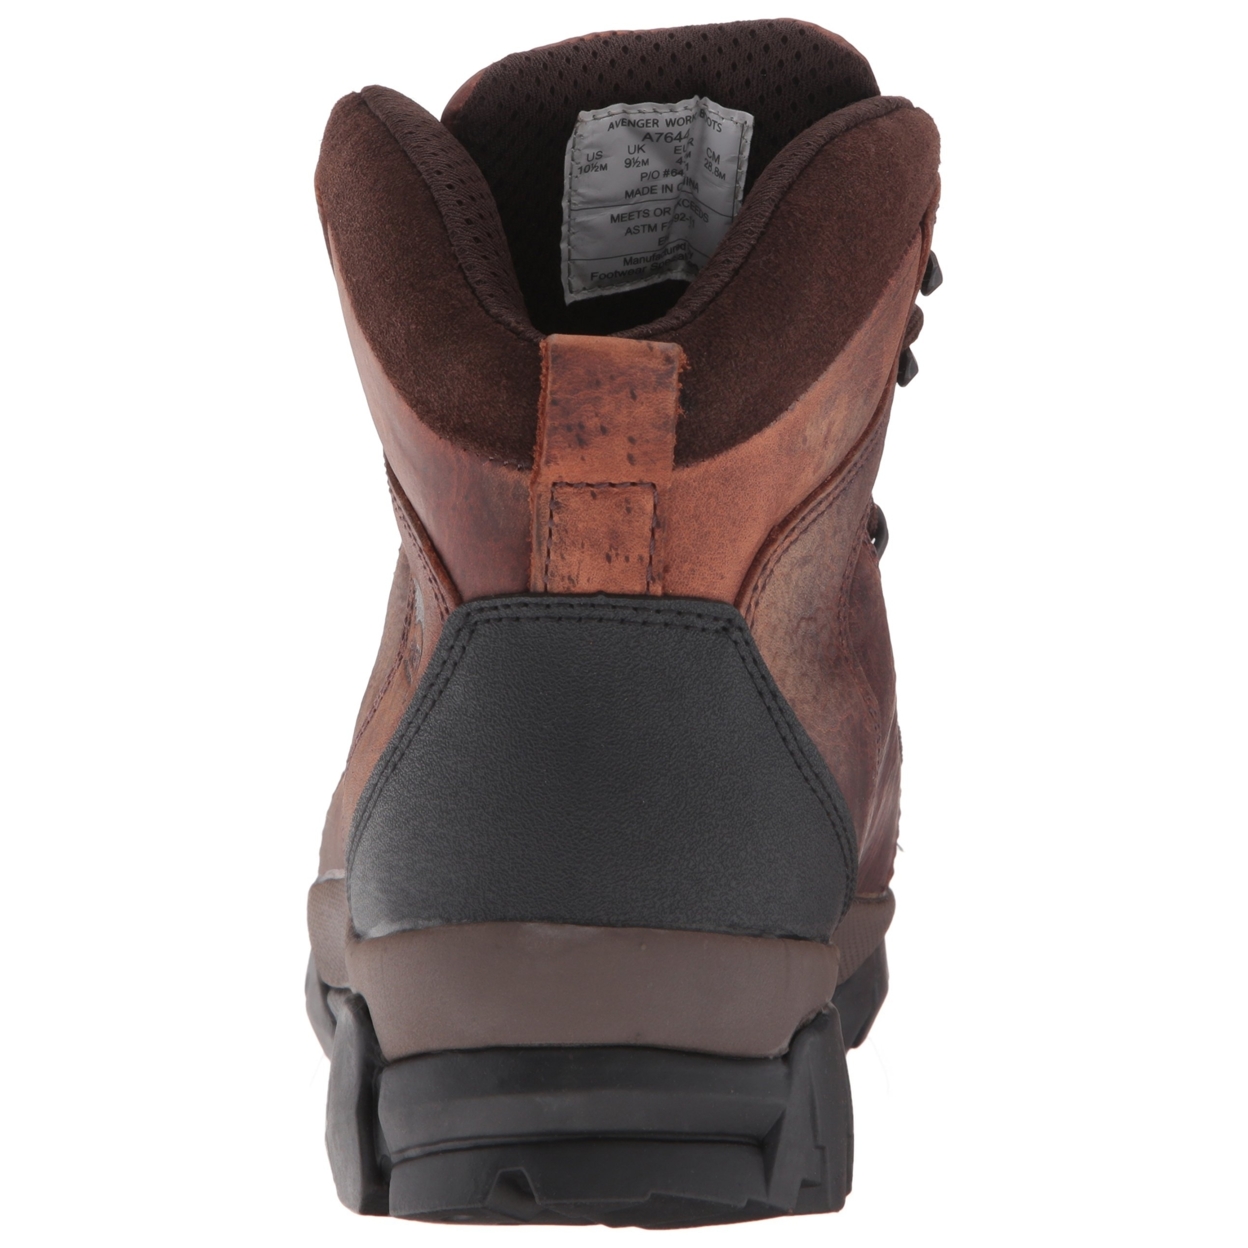 FSI FOOTWEAR SPECIALTIES INTERNATIONAL NAUTILUS FSI Avenger Men's 6 Mid Leather Waterproof Soft Toe No Exposed Metal EH Work Boots BROWN -